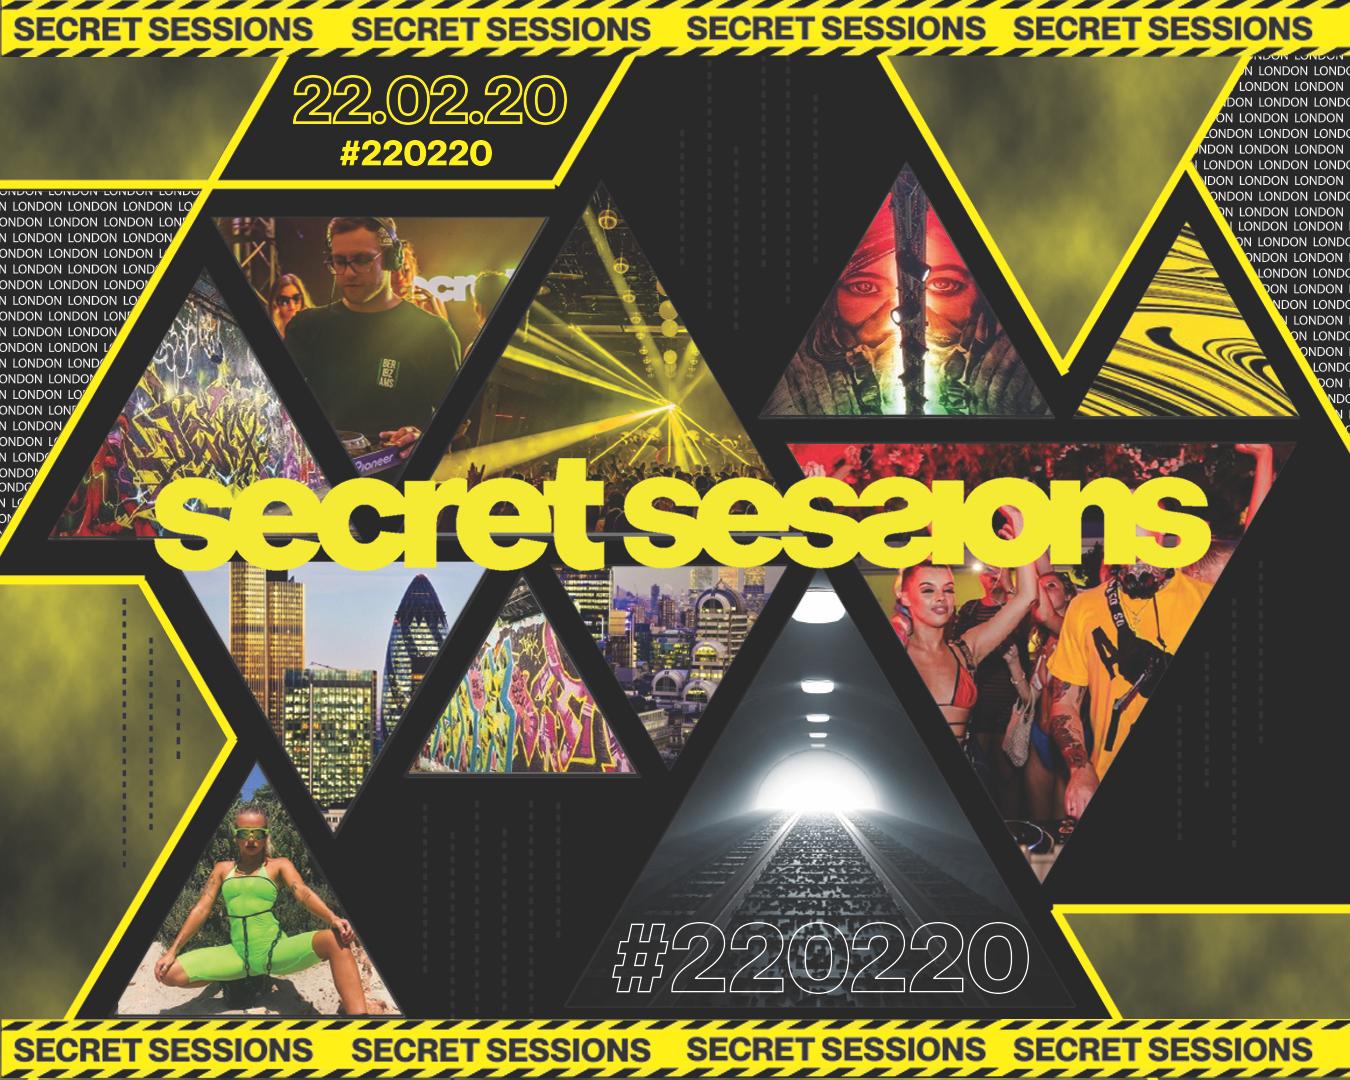 Secret Sessions Secret Star Sessions Imxto Star Sessions Lisa